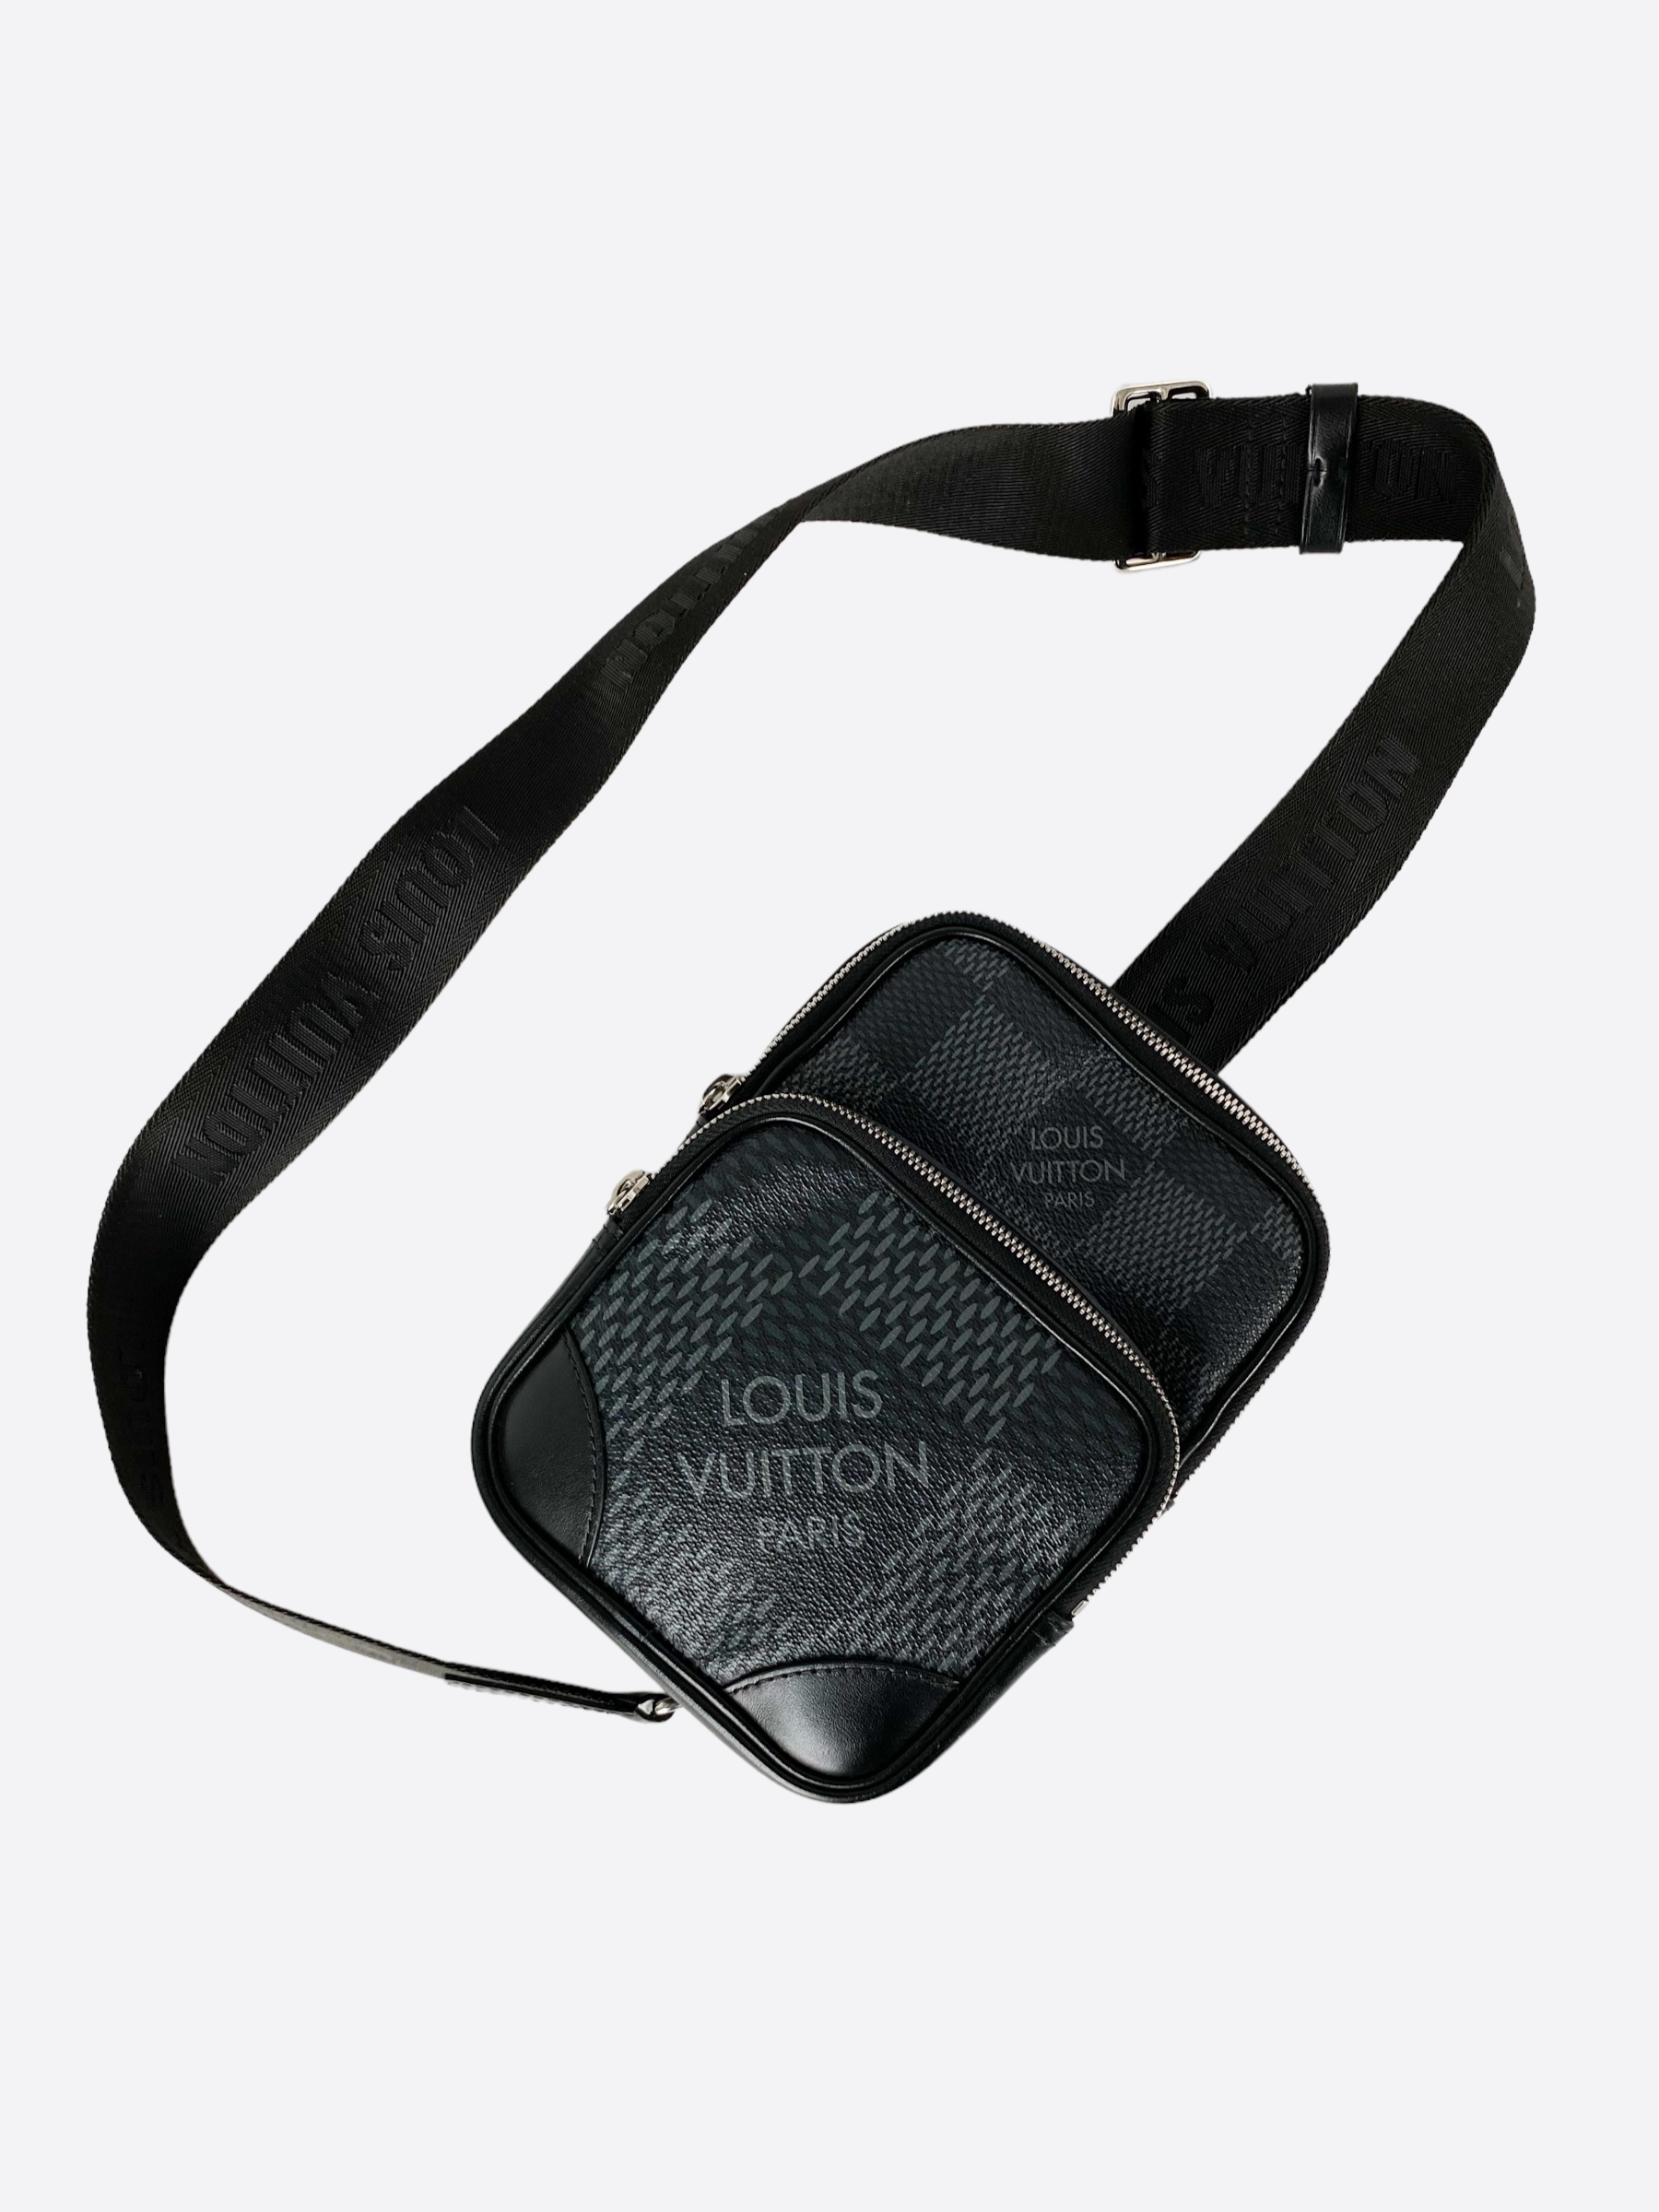 Louis Vuitton Monogram Bumbag M43644  Amazonin Bags Wallets and Luggage